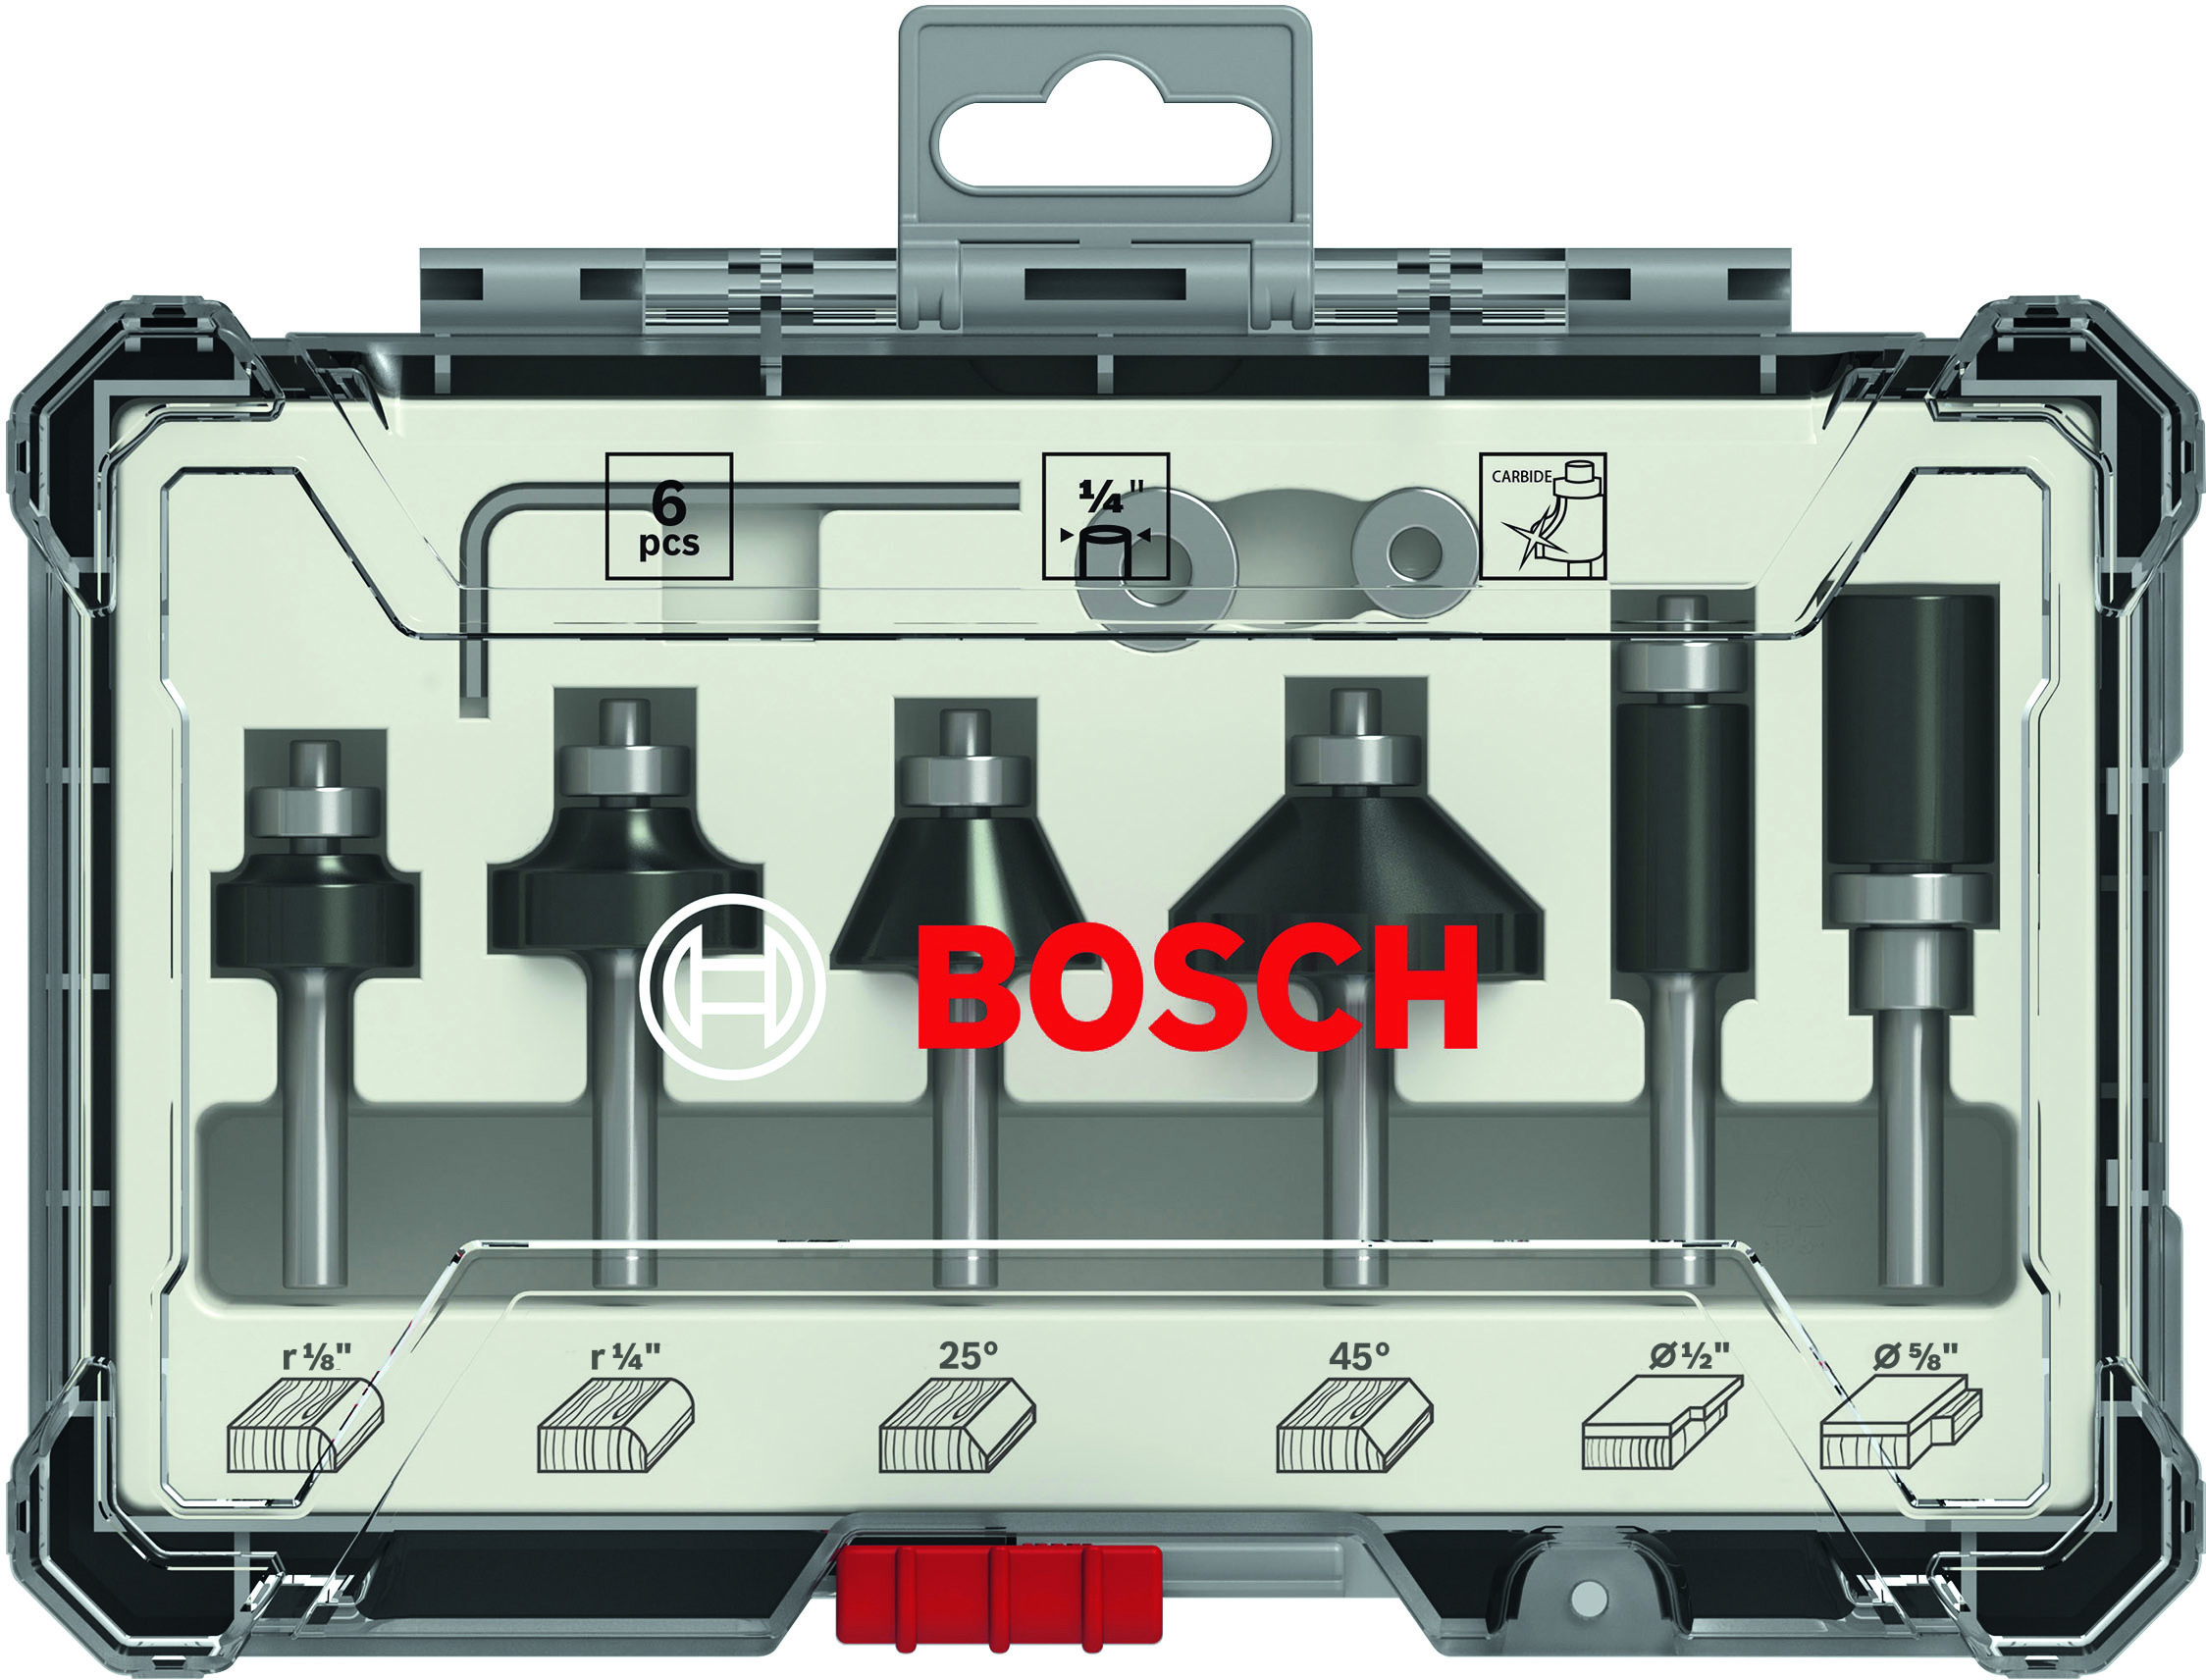 Bosch 1/4" Trim & Edging Router Bit Set (6pcs)